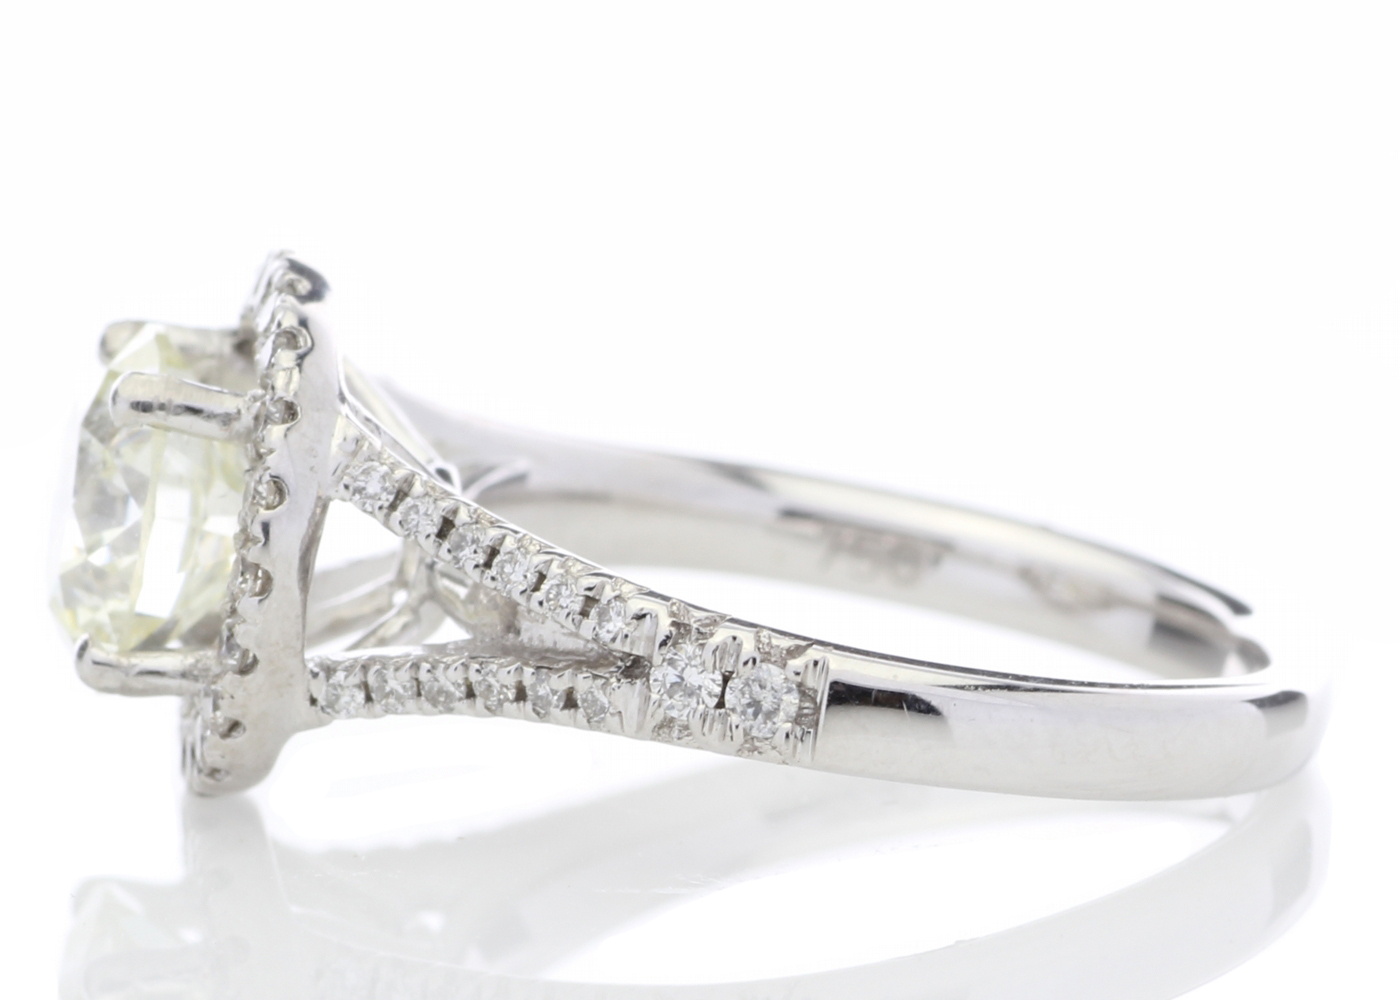 18ct White Gold Halo Set Diamond Ring 1.98 Carats - Image 3 of 5